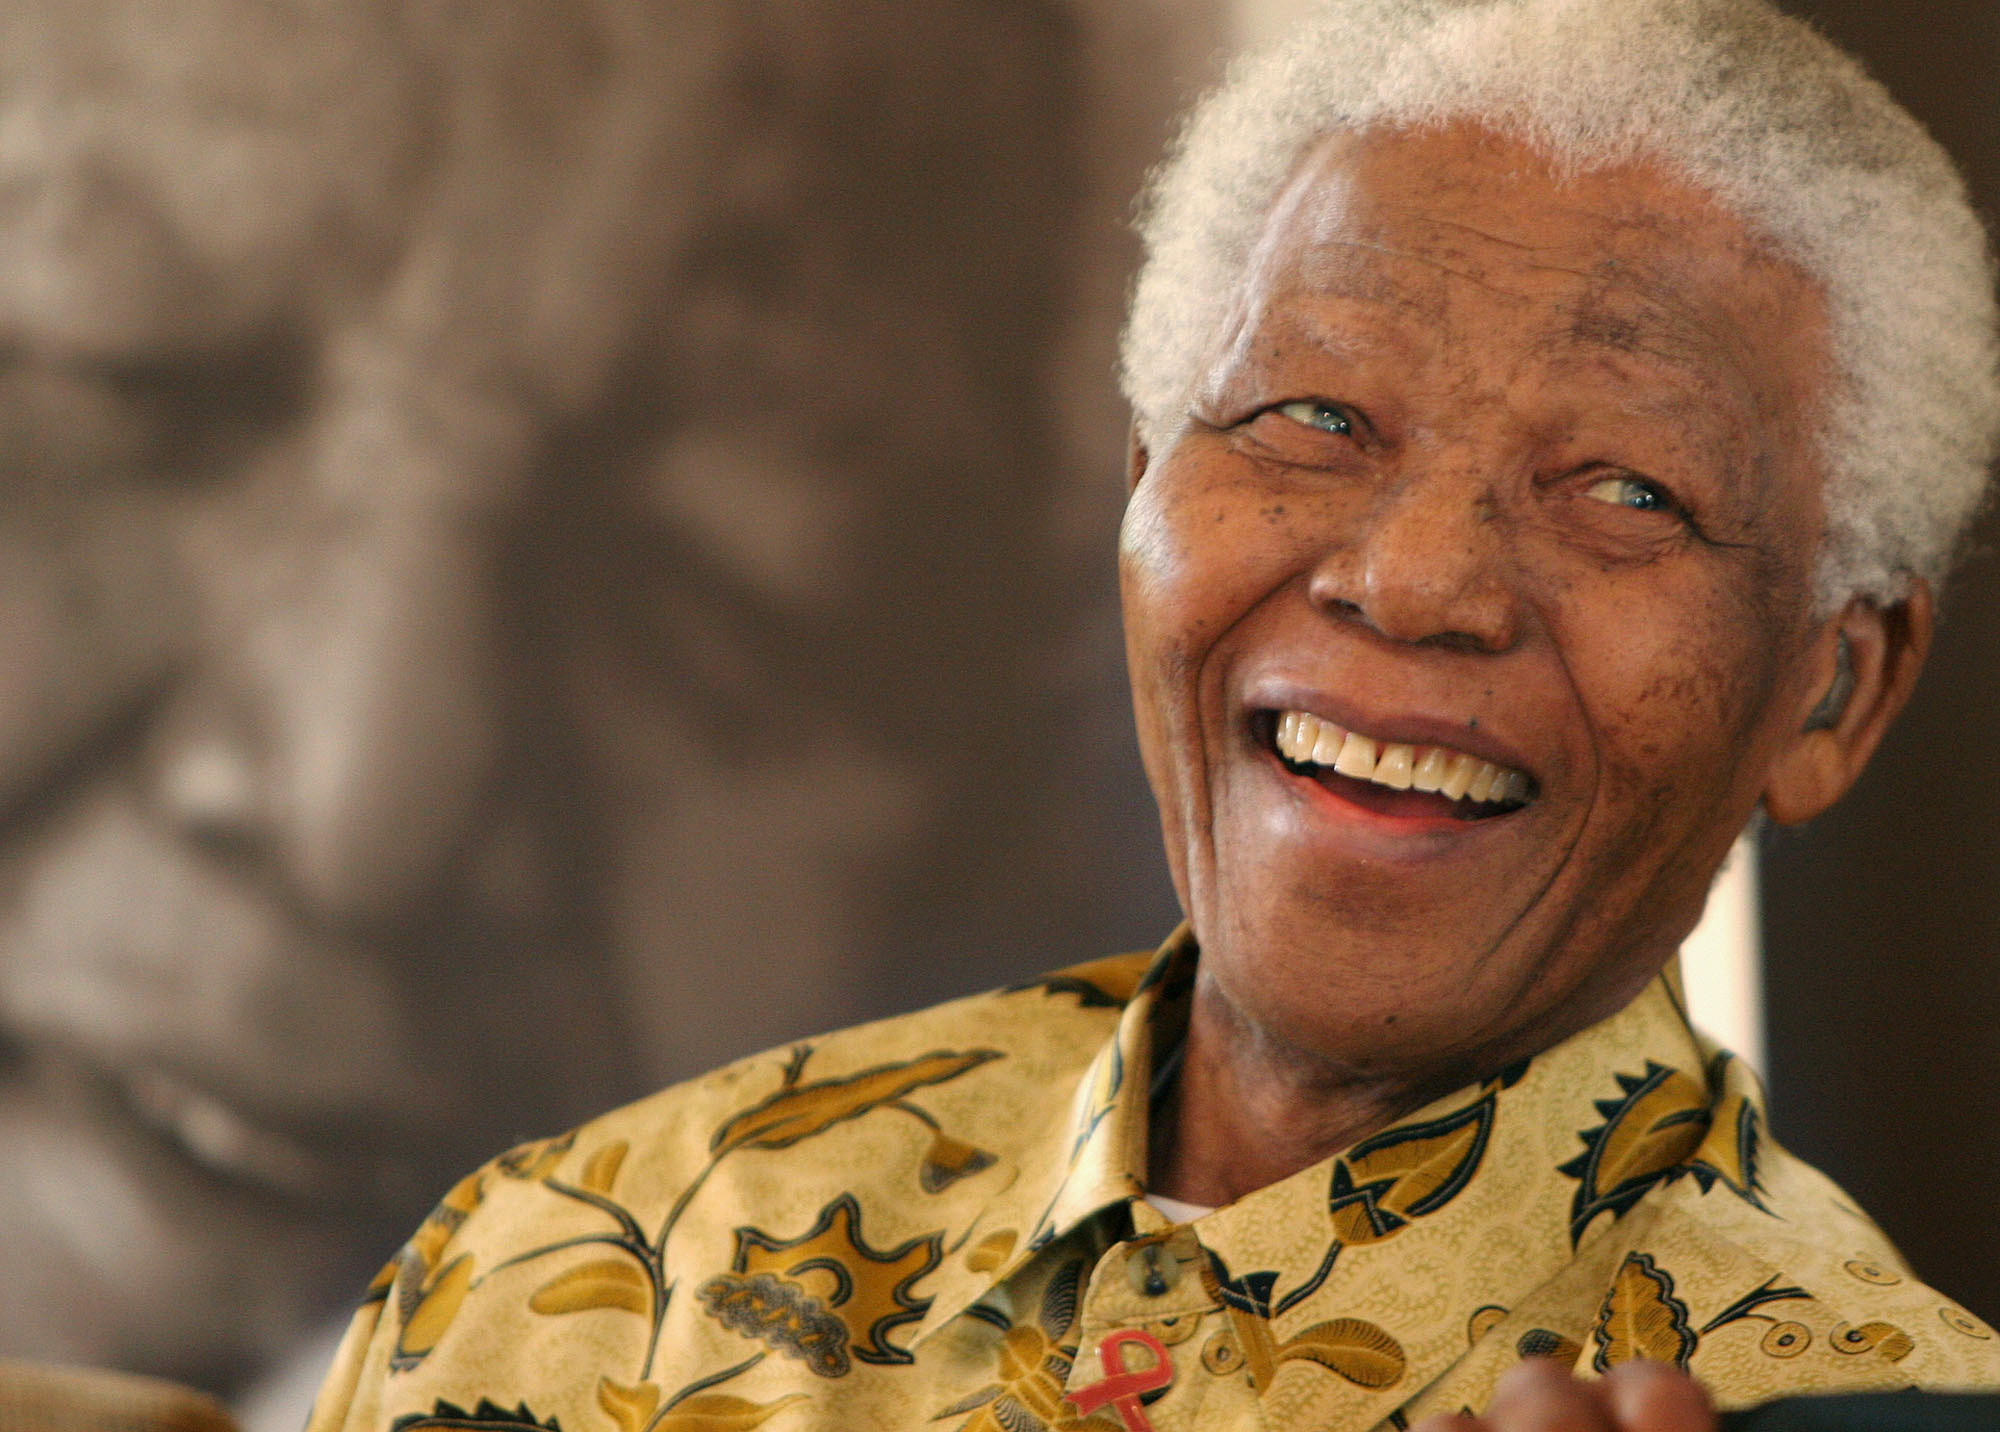 A Smile From Nelson Mandela